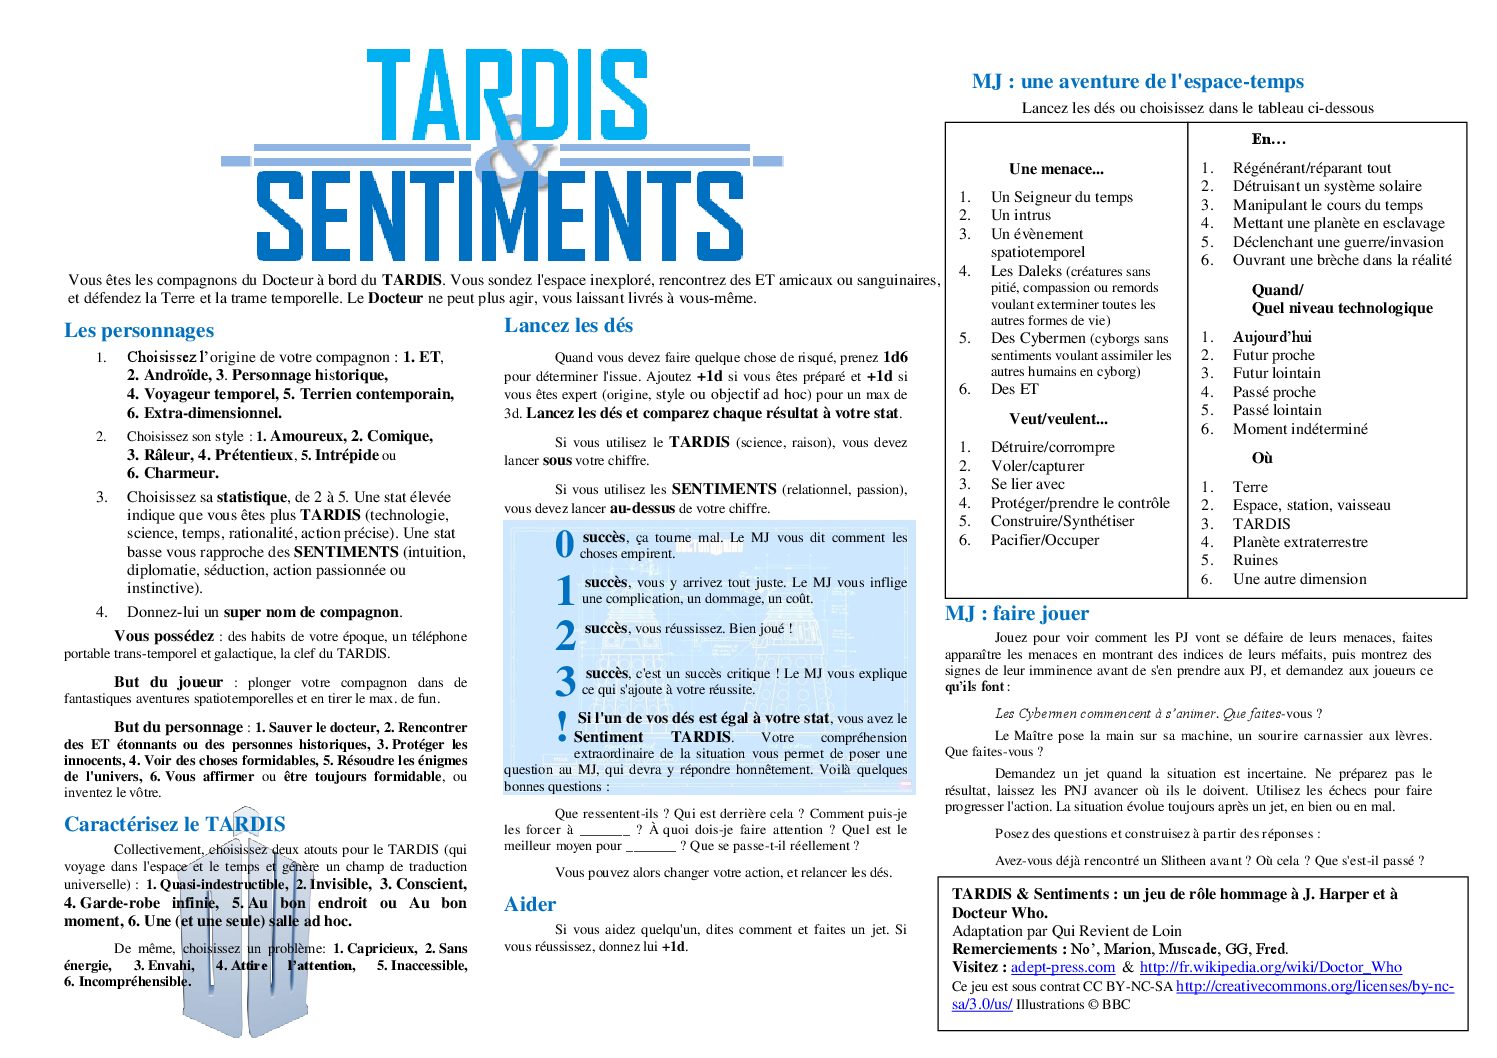 TARDIS & Sentiments